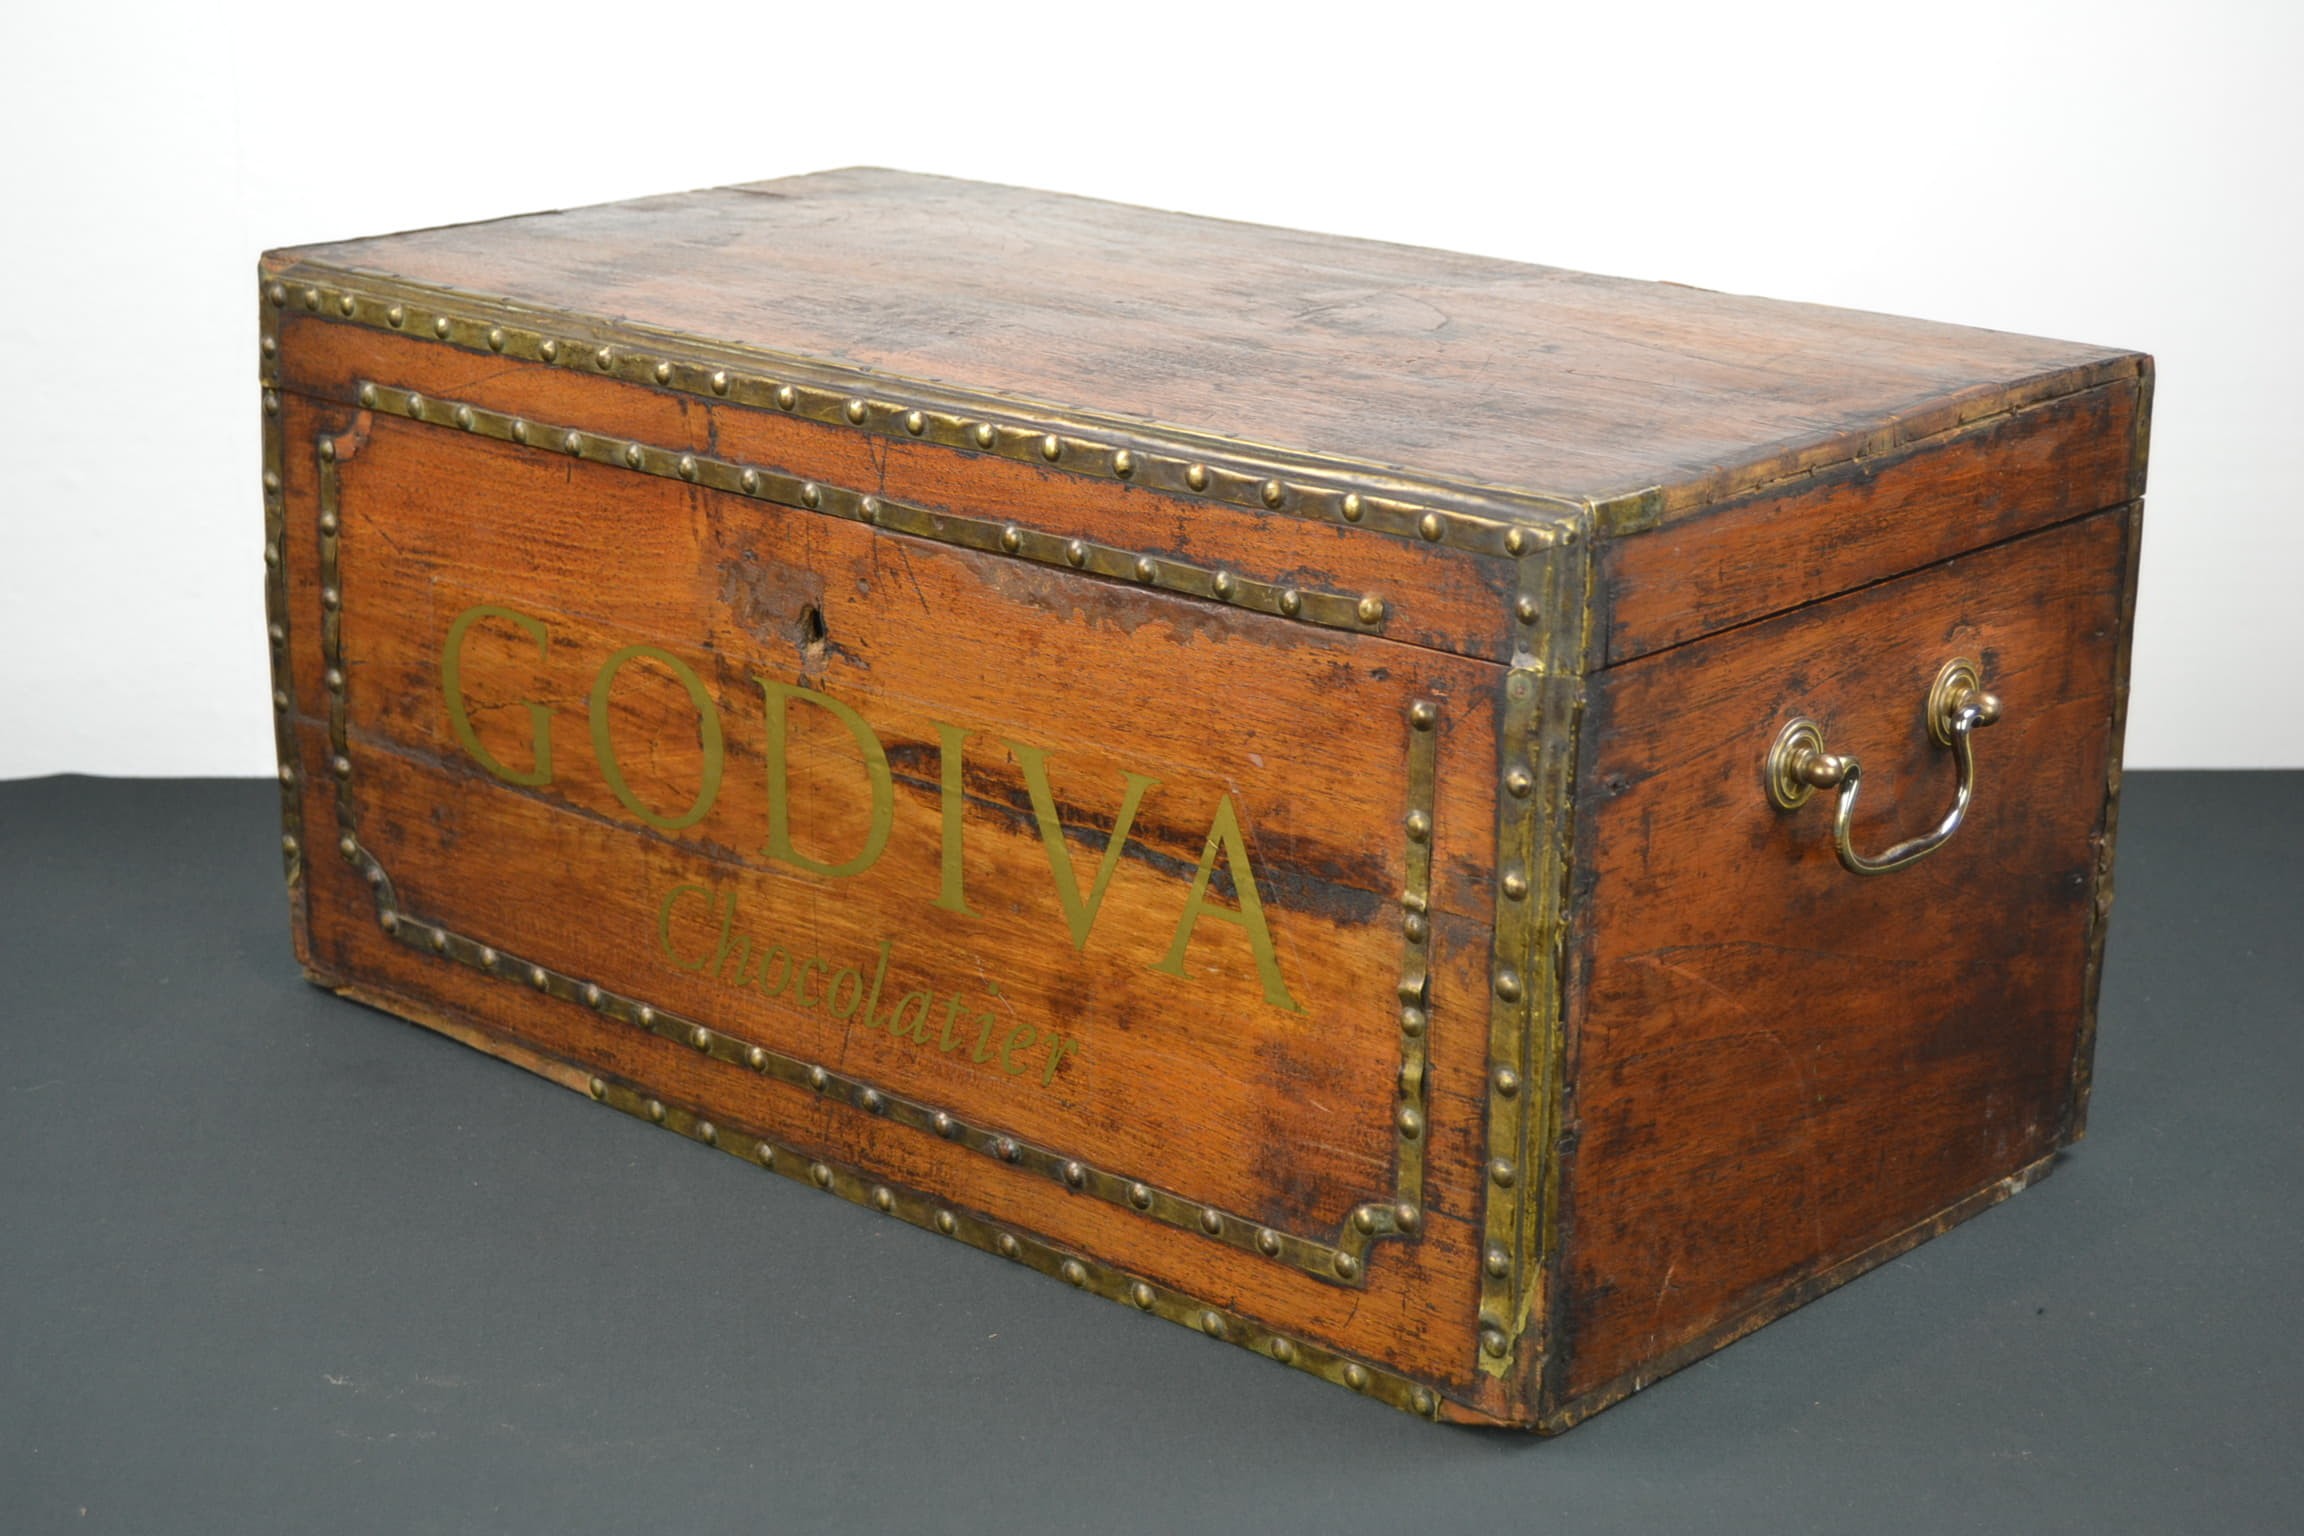 Antique wooden storage trunk with copper details retro